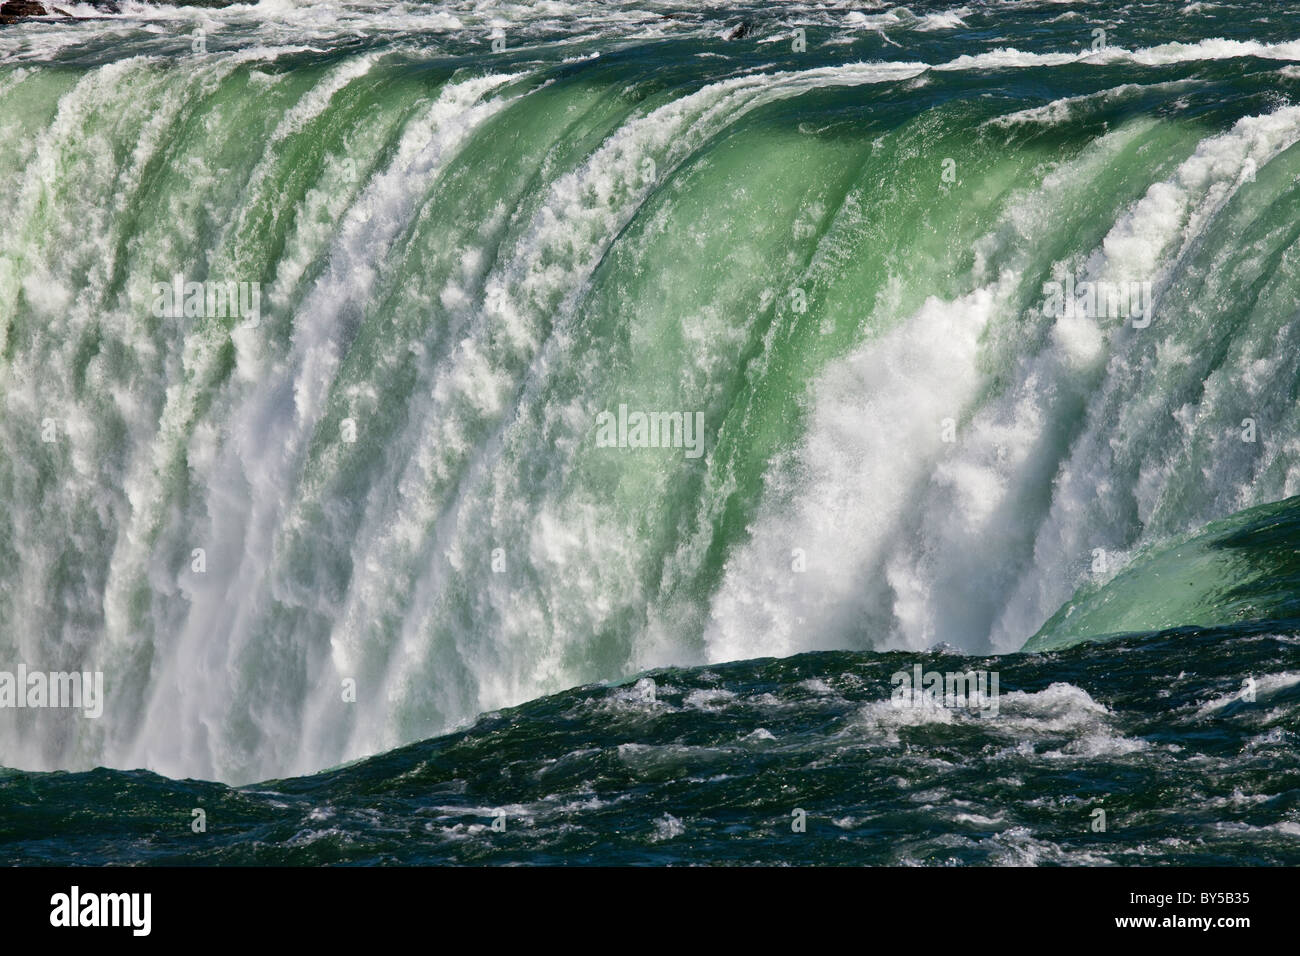 Canada,Ontario,Niagara Falls, close-up view of the brink of the Canadian Falls Stock Photo